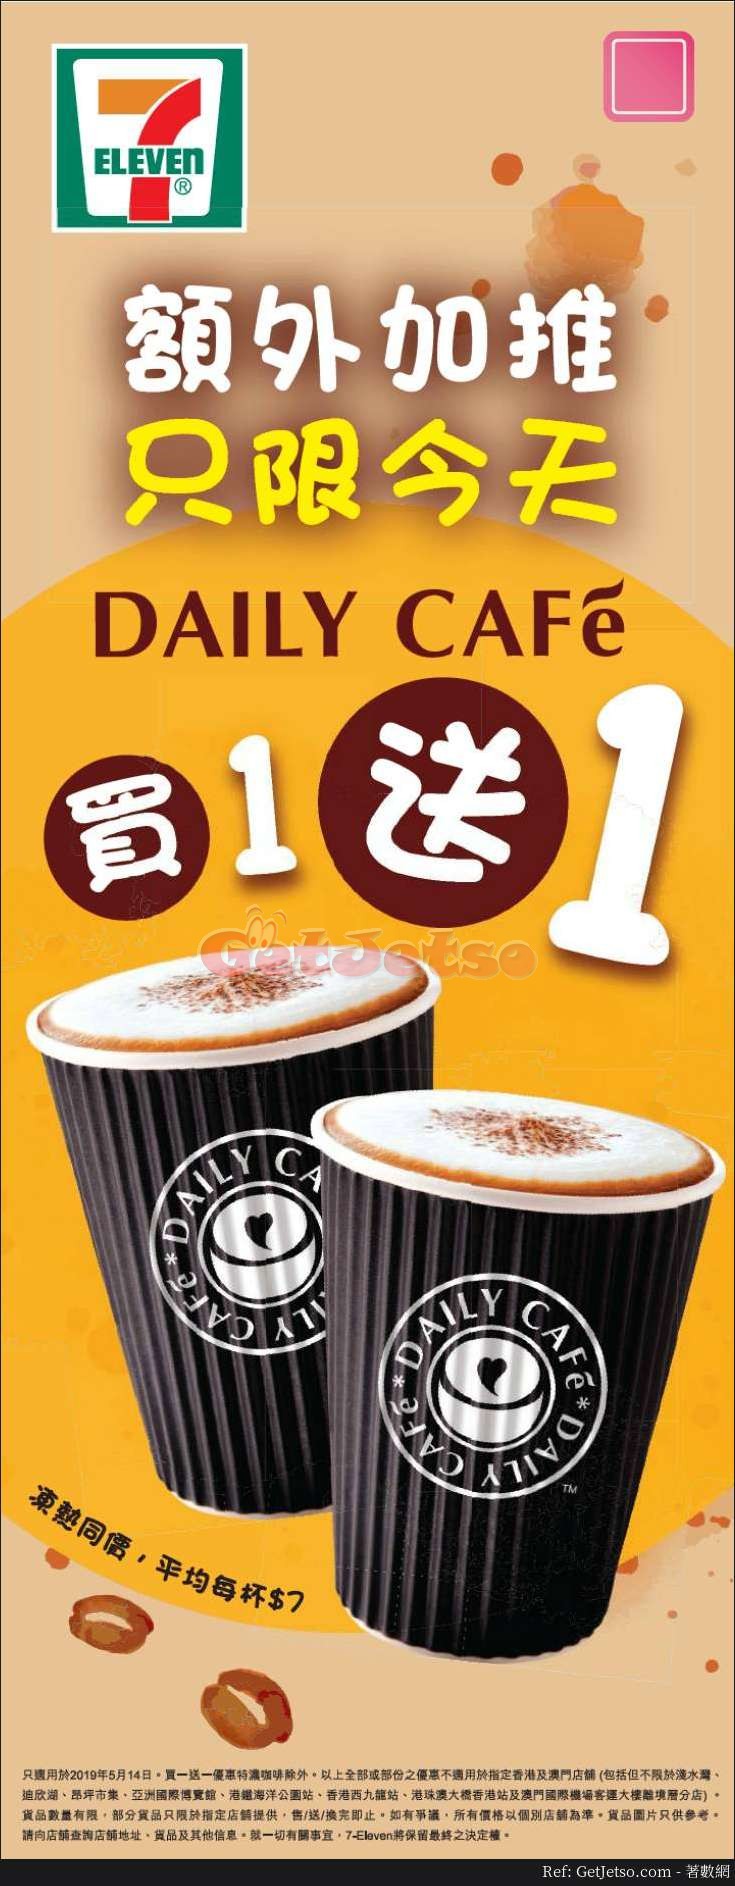 7-Eleven DAILY CAFE 買1送1優惠(19年5月14日)圖片1